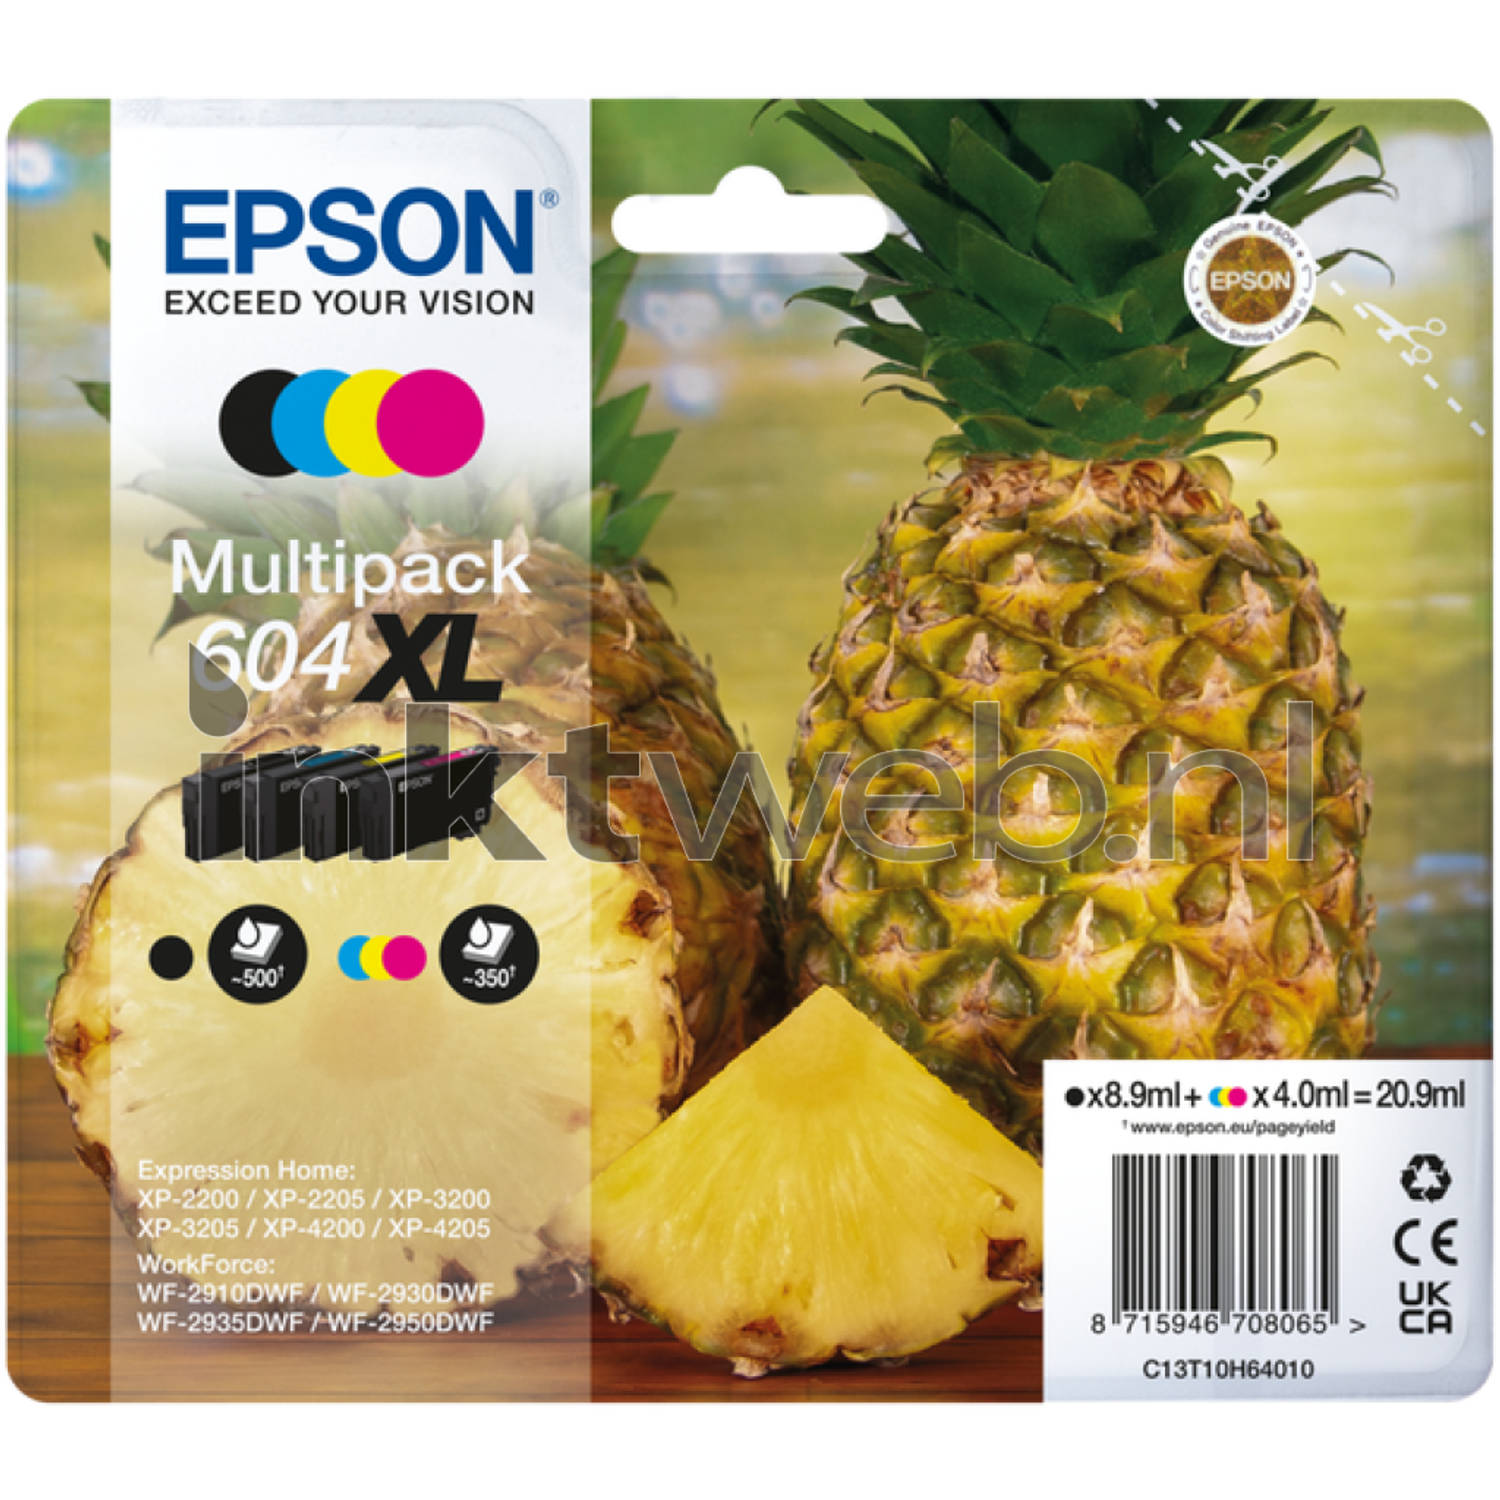 Epson 604XL, EasyMail Multipack (Ananas)